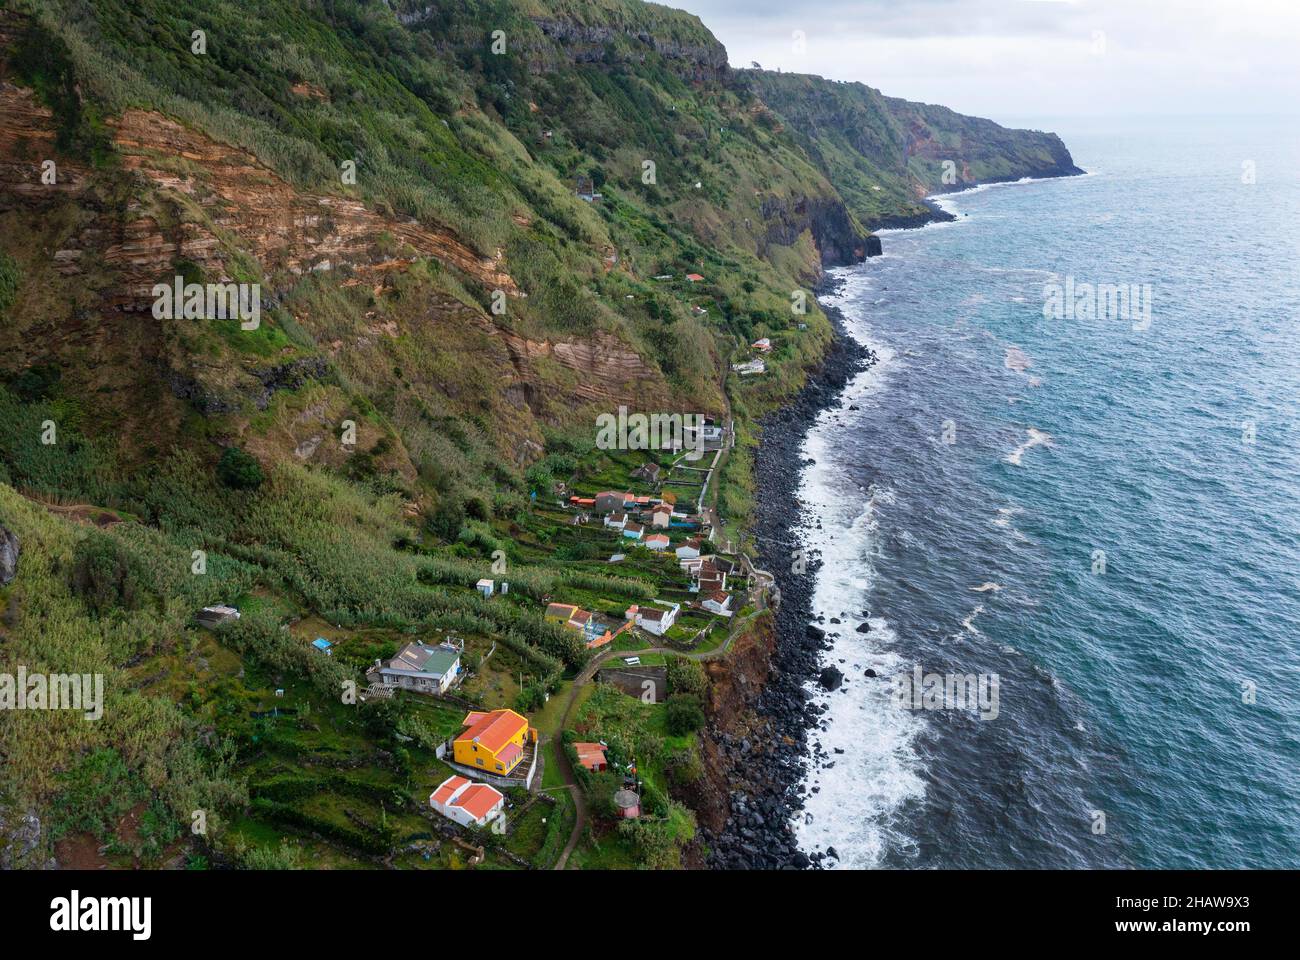 View of the cliff and settlement of Rocha da Relva, Sao Miguel Island, Azores, Portugal Stock Photo